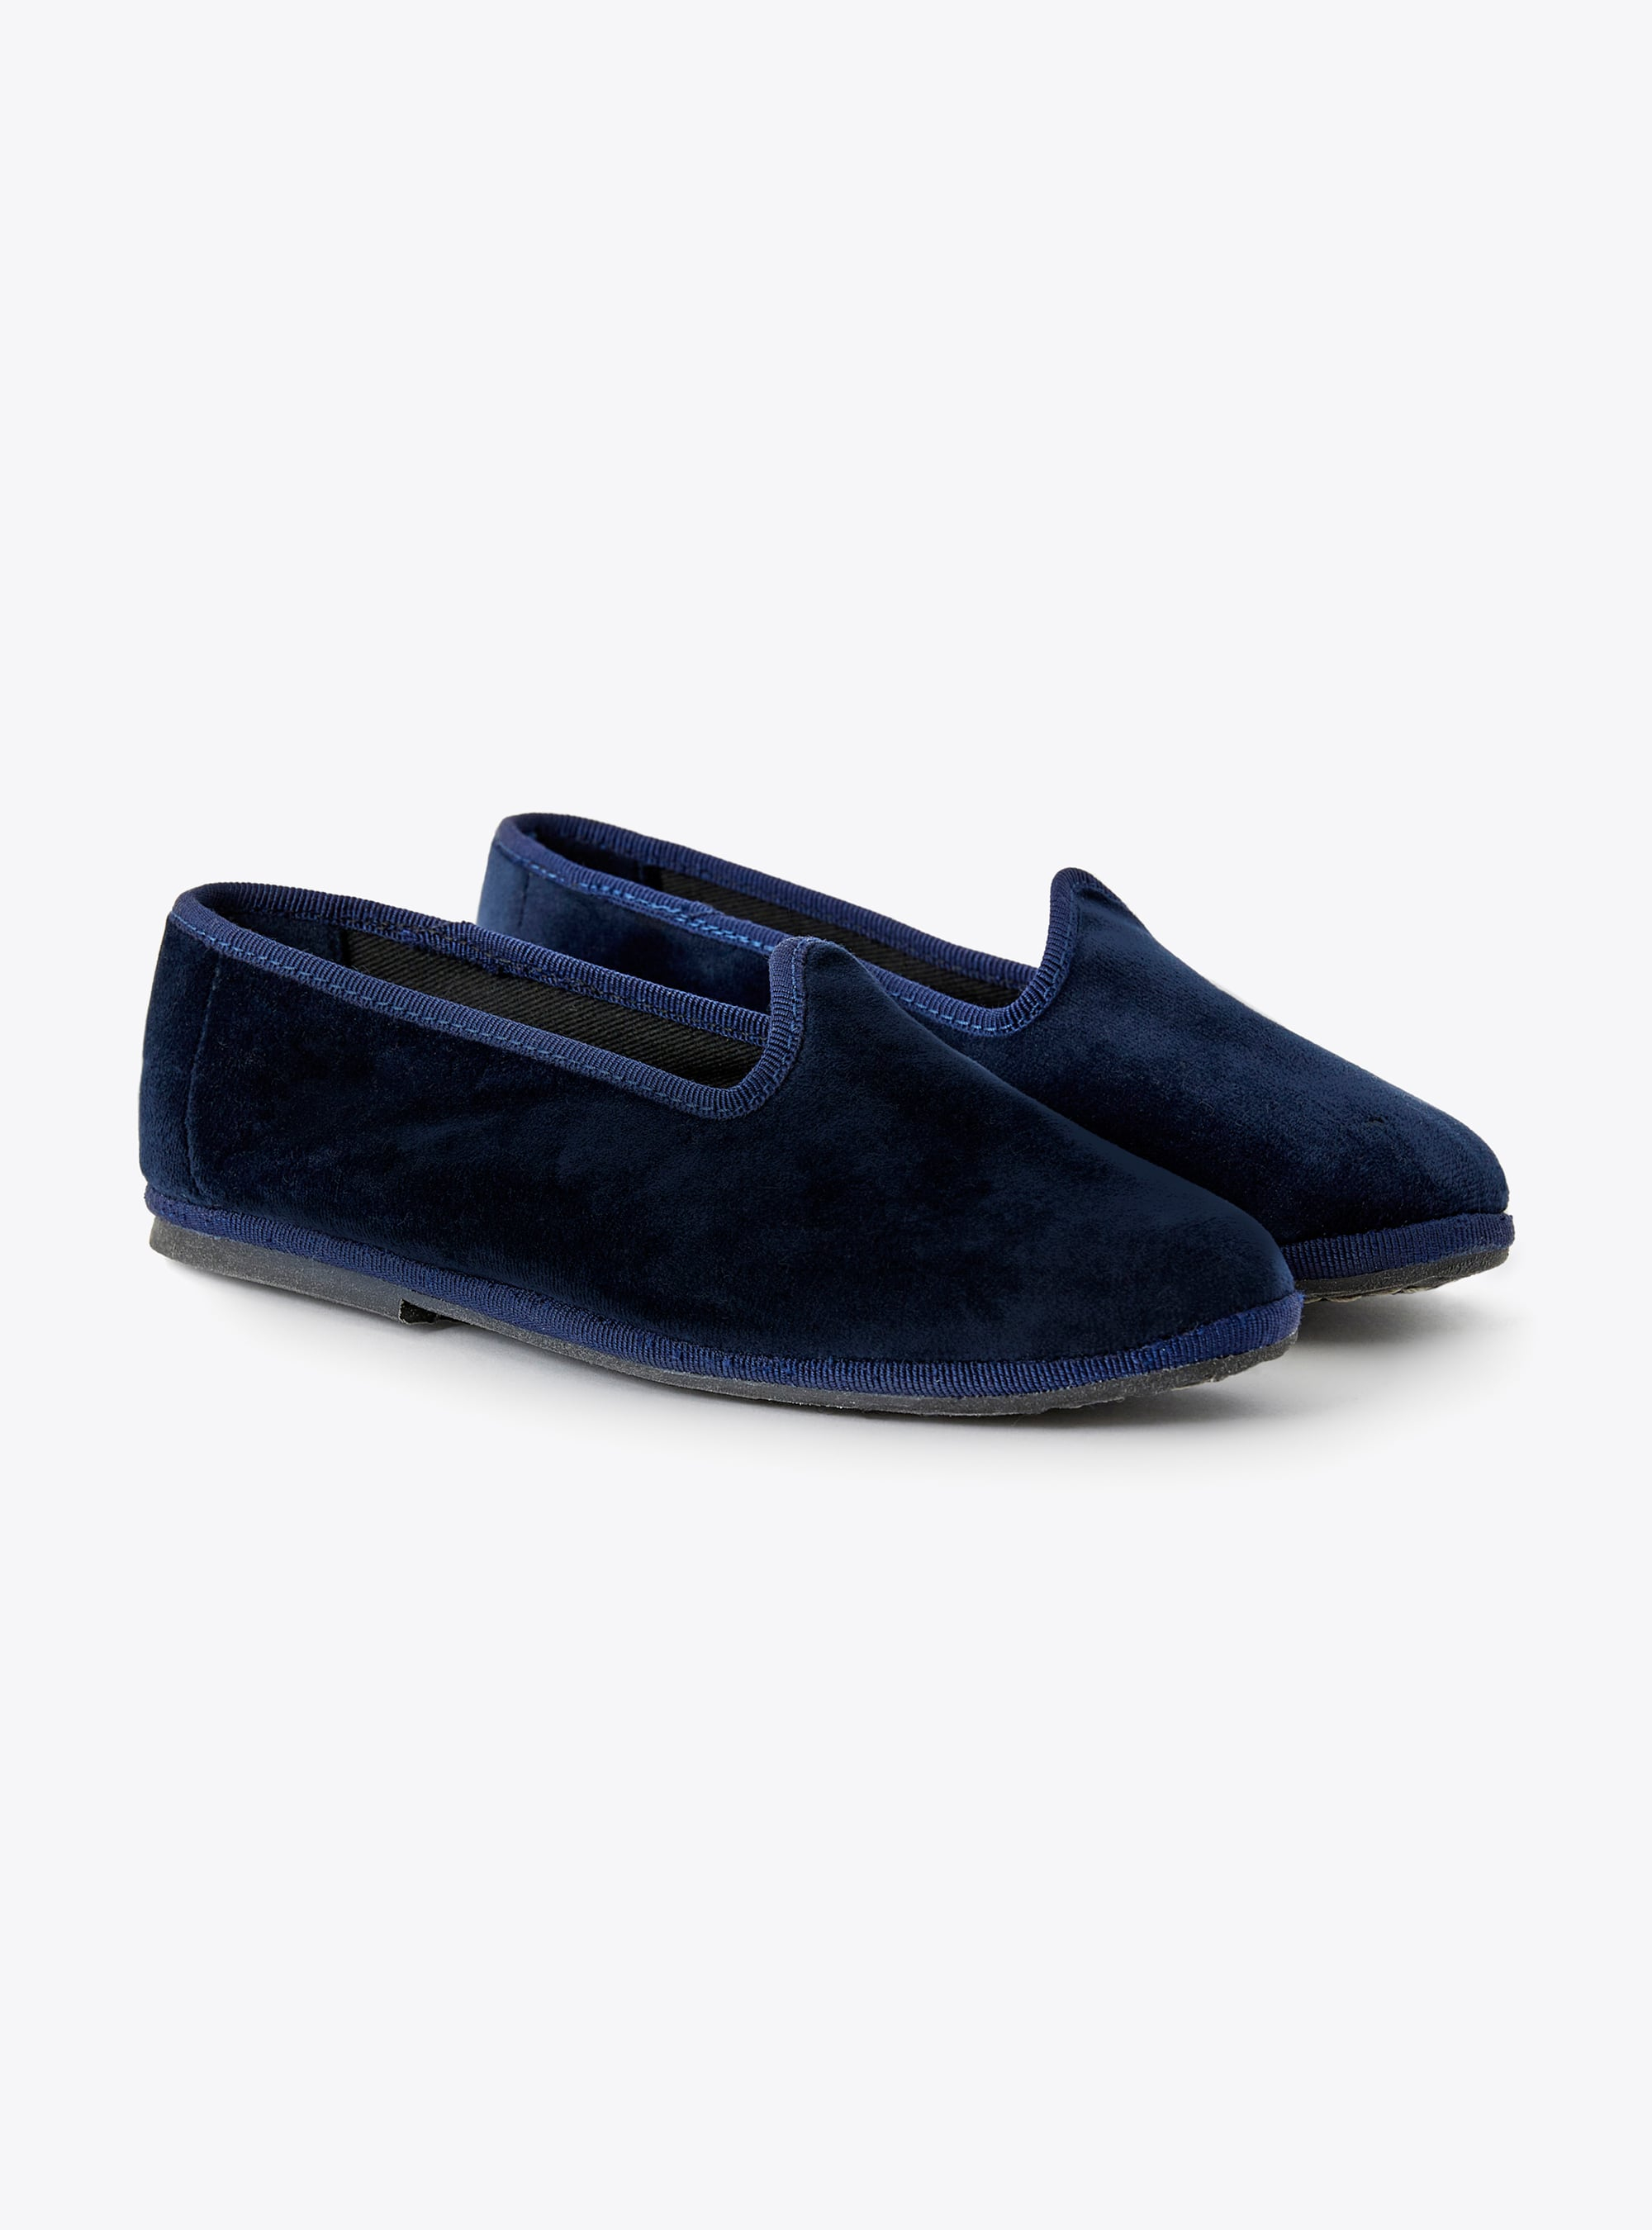 Slipper aus blauem Samt - Schuhe - Il Gufo